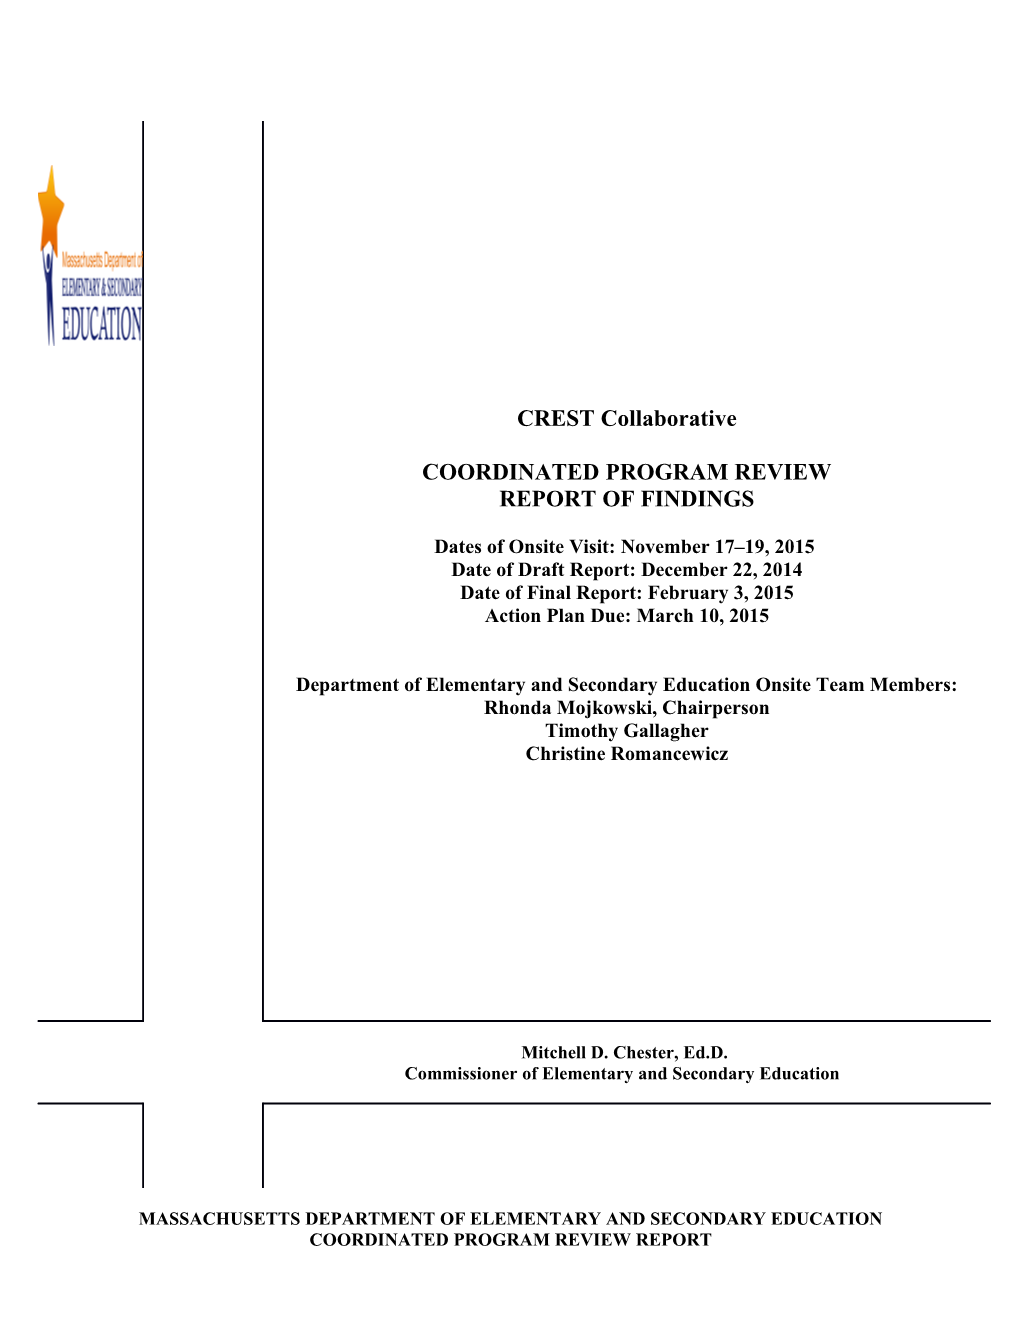 CREST Collaborative CPR Final Report 2015